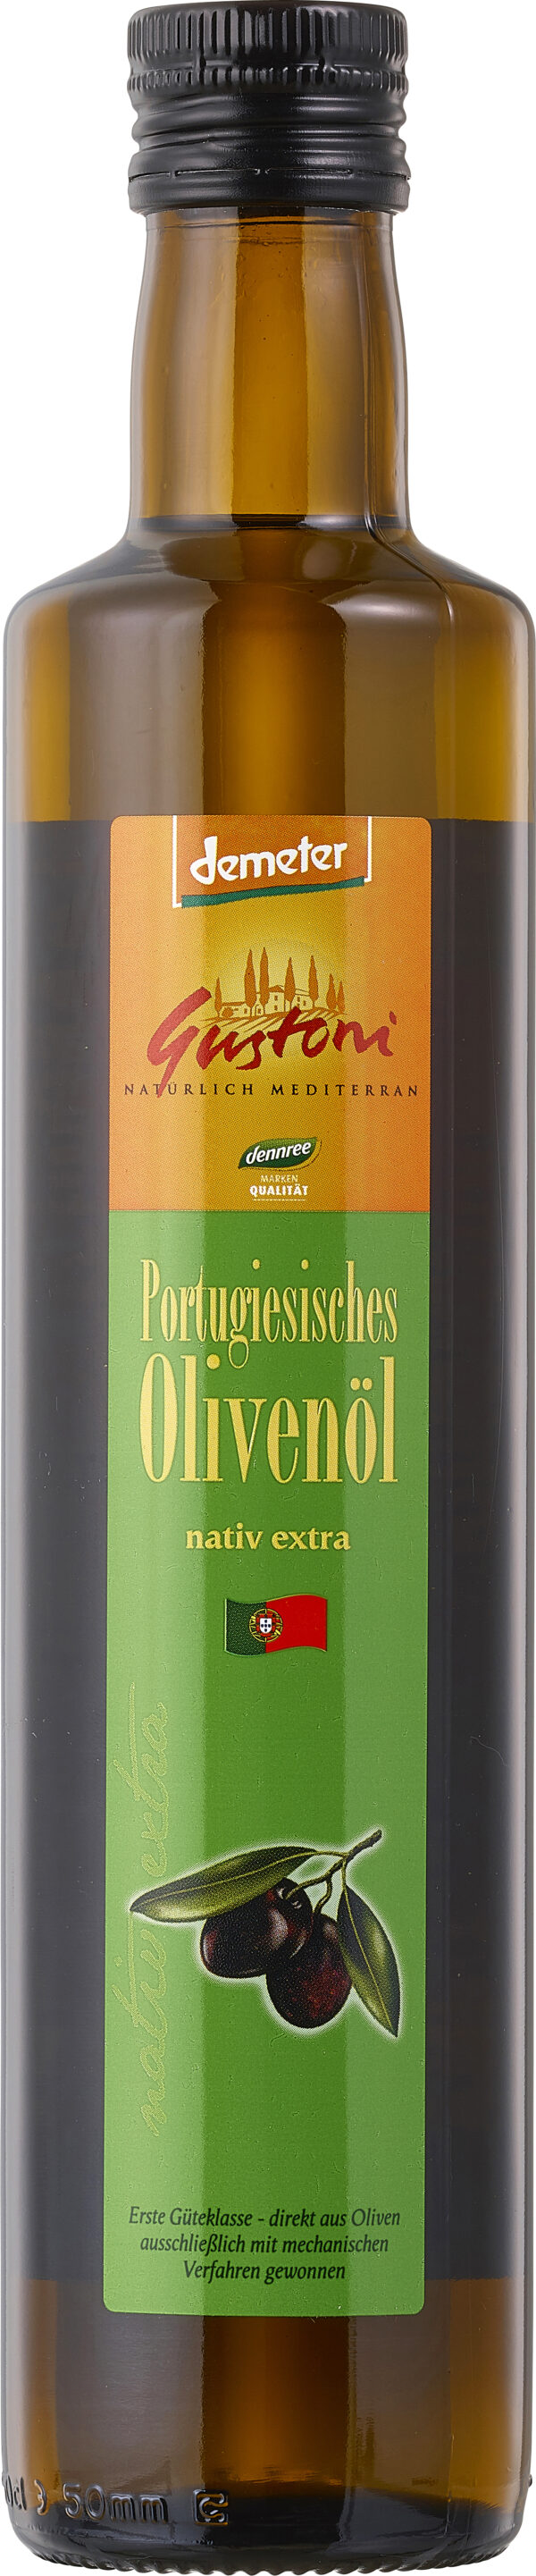 Gustoni Portugiesisches Olivenöl nativ extra 6 x 0,5l